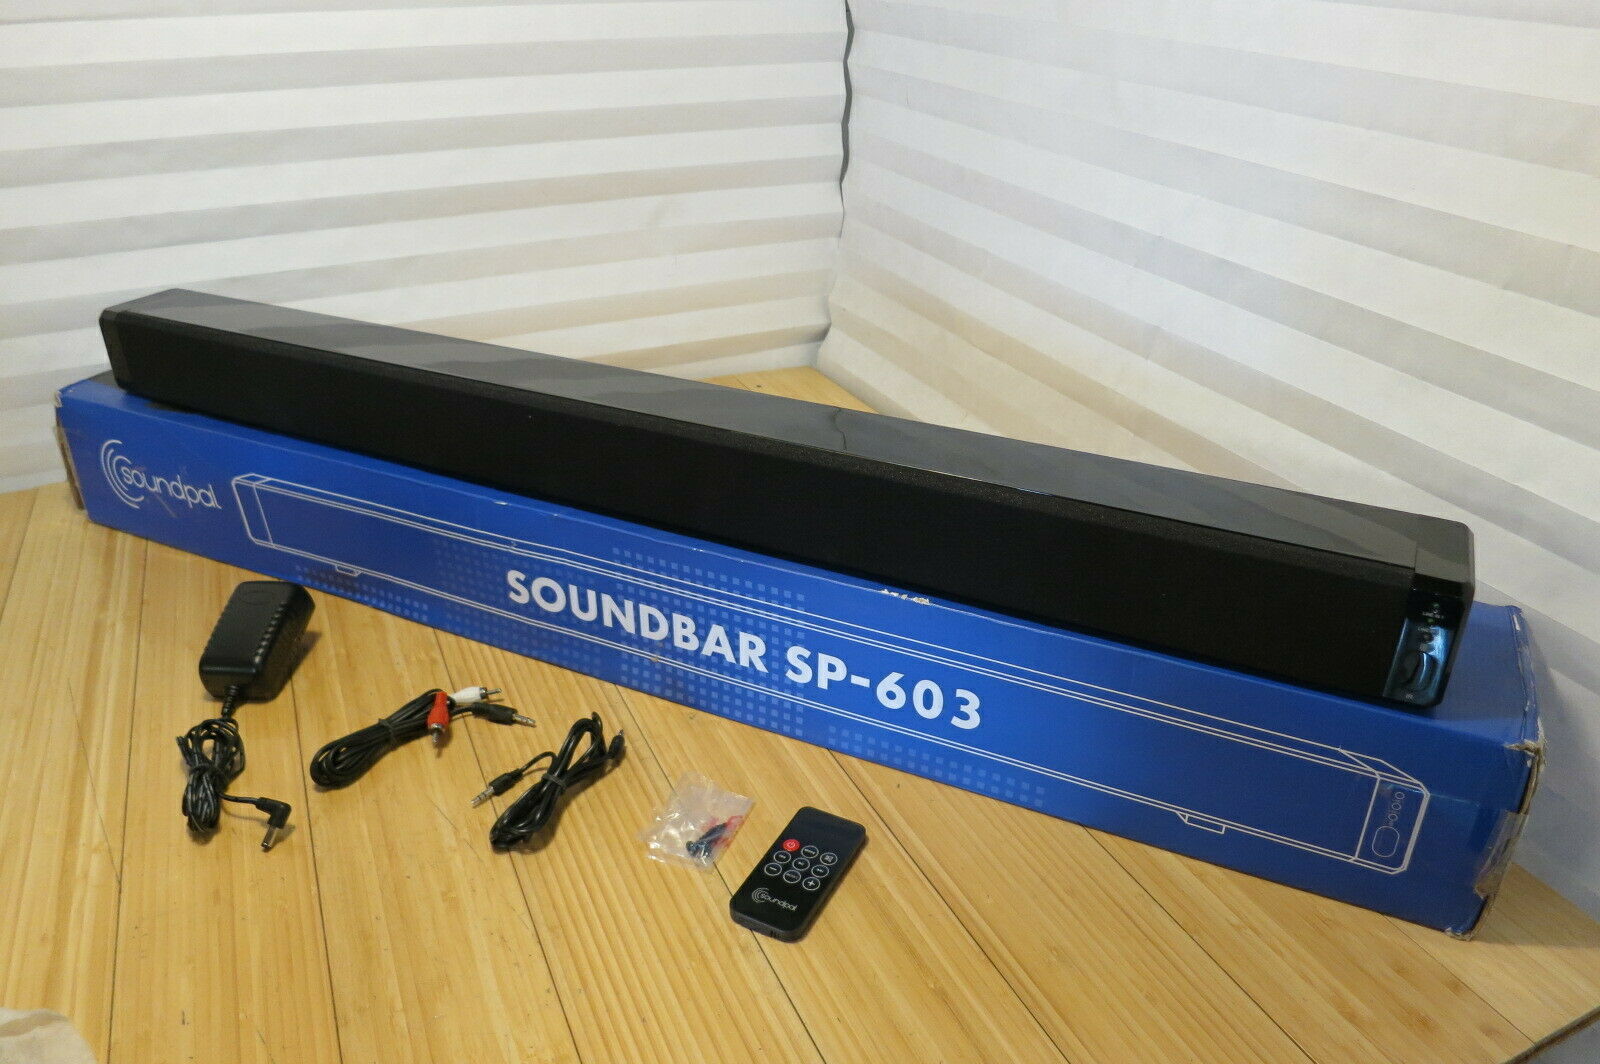 Primary image for soundpal SOUNDBAR SP-603 37-Inch Bluetooth 2.0 Sound Bar With Remote